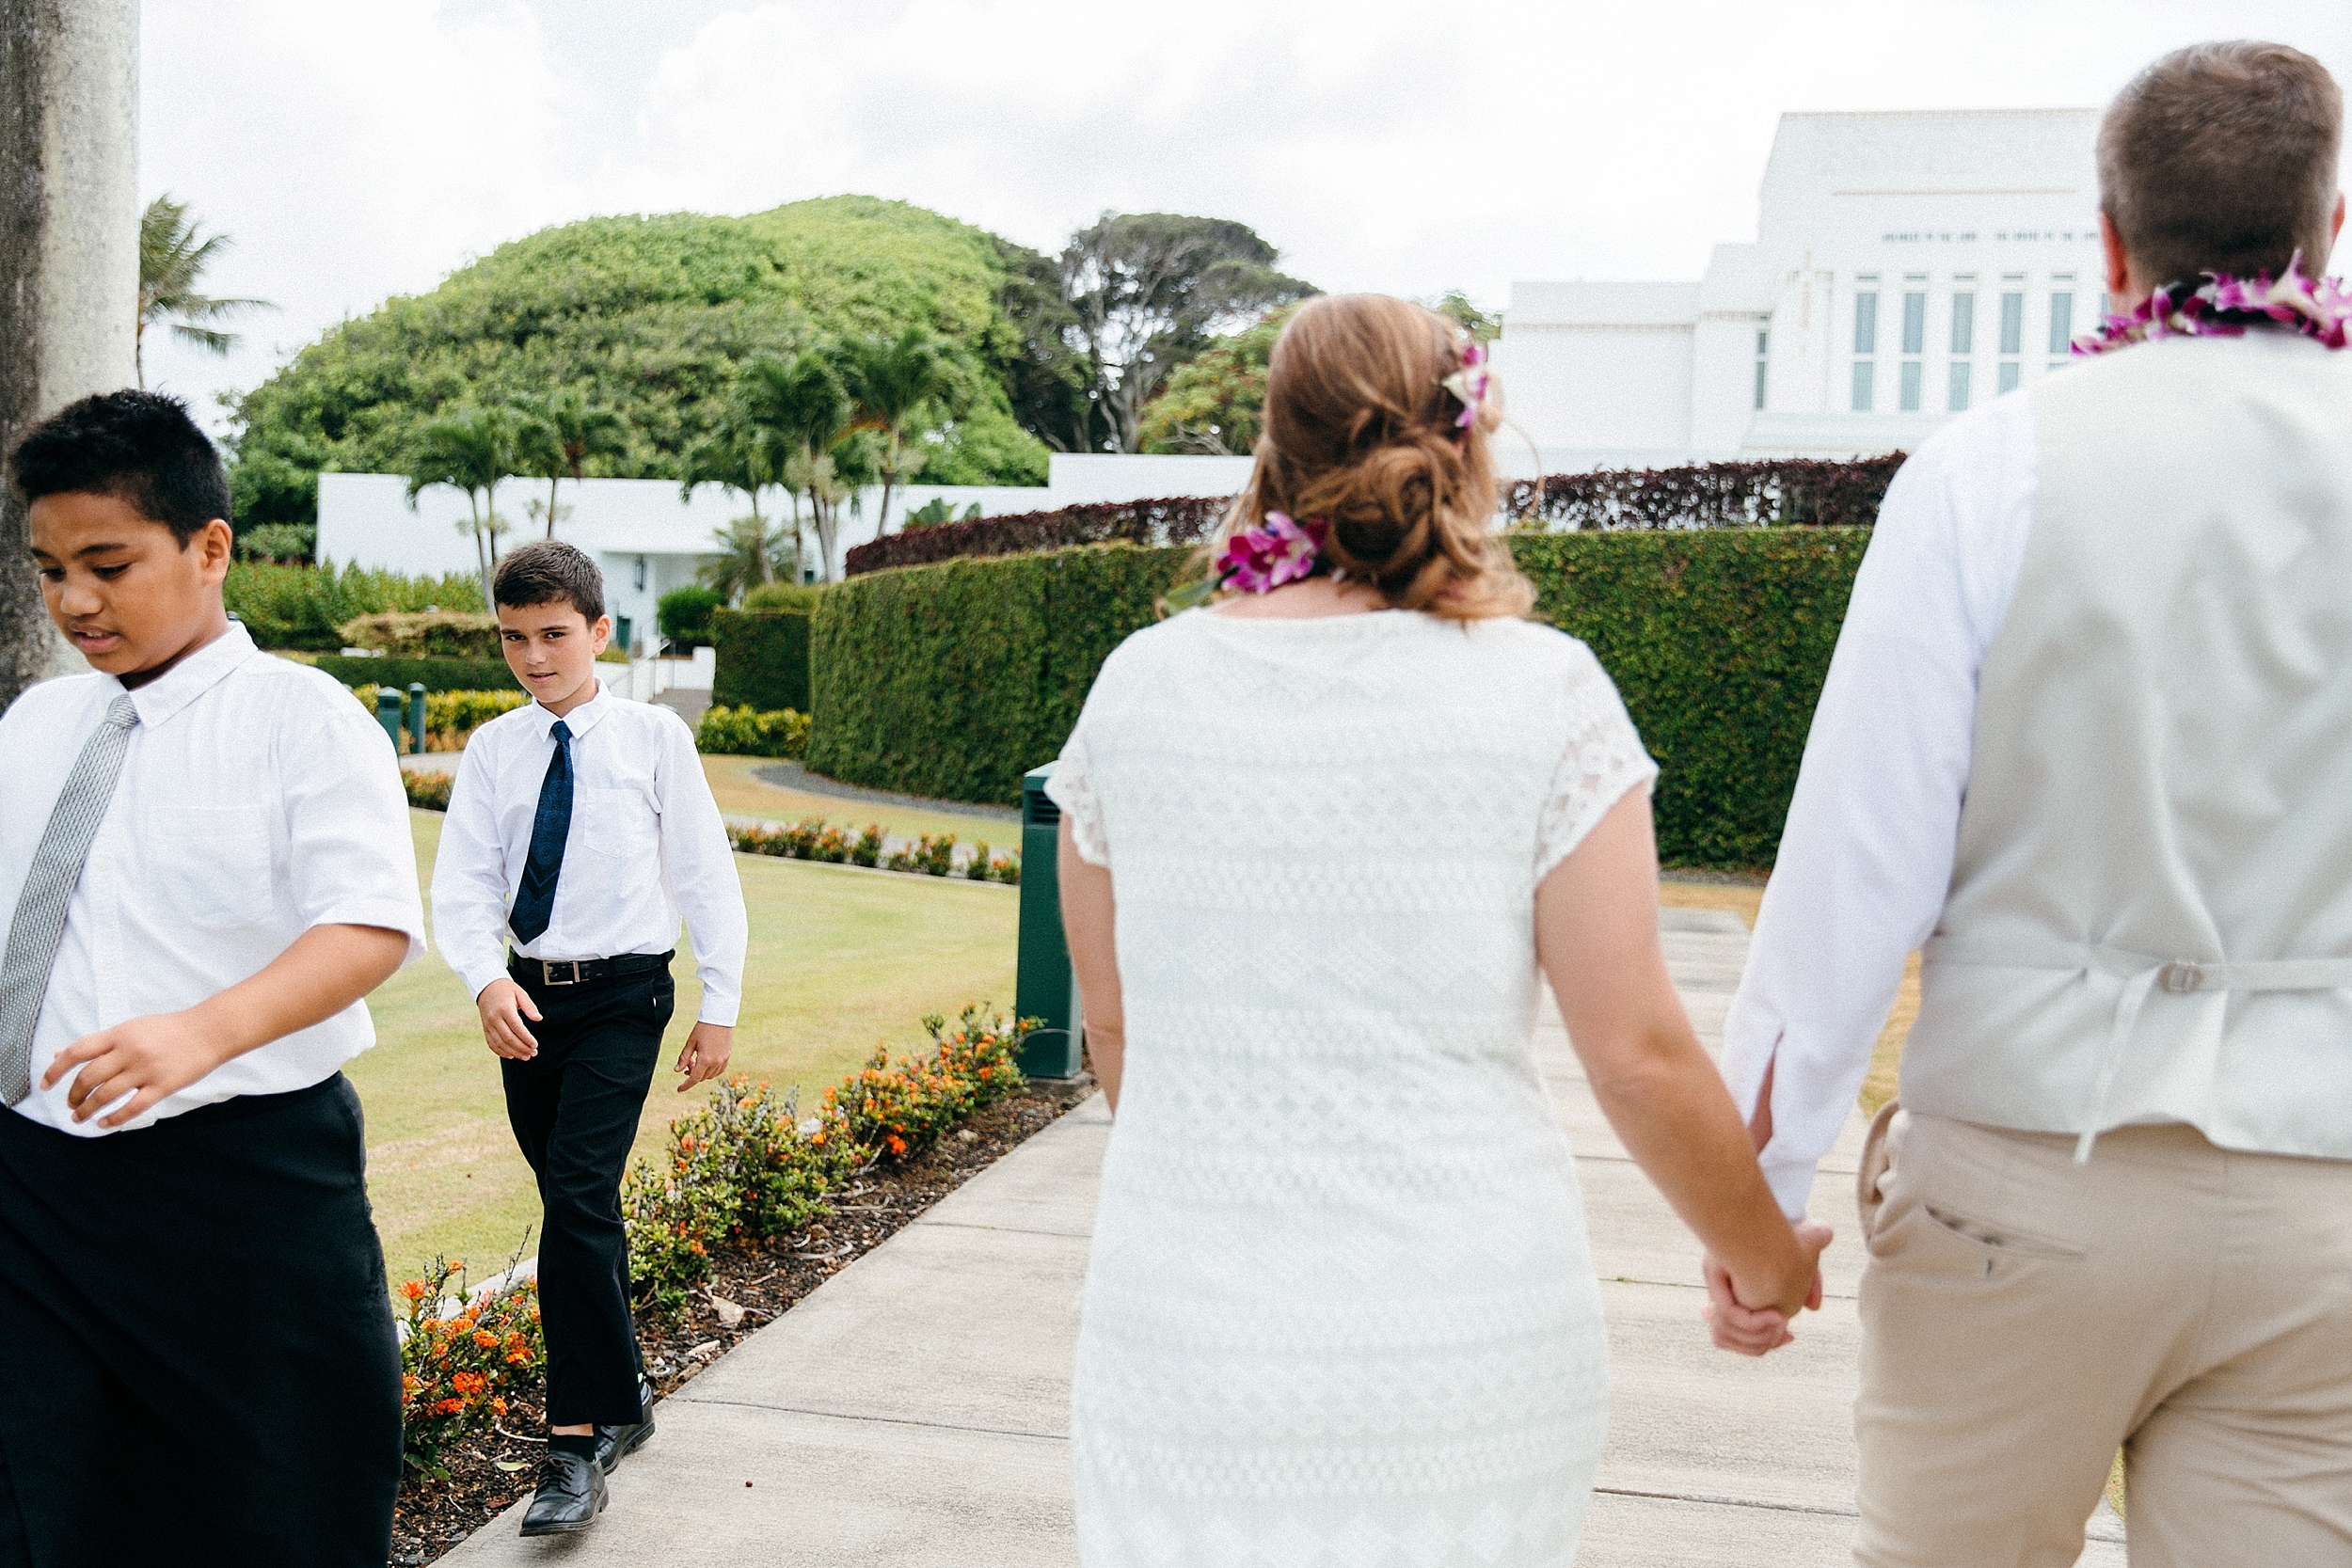  Elopement on North Shore, Oahu in La'ie - Hawaii Wedding Photographers 